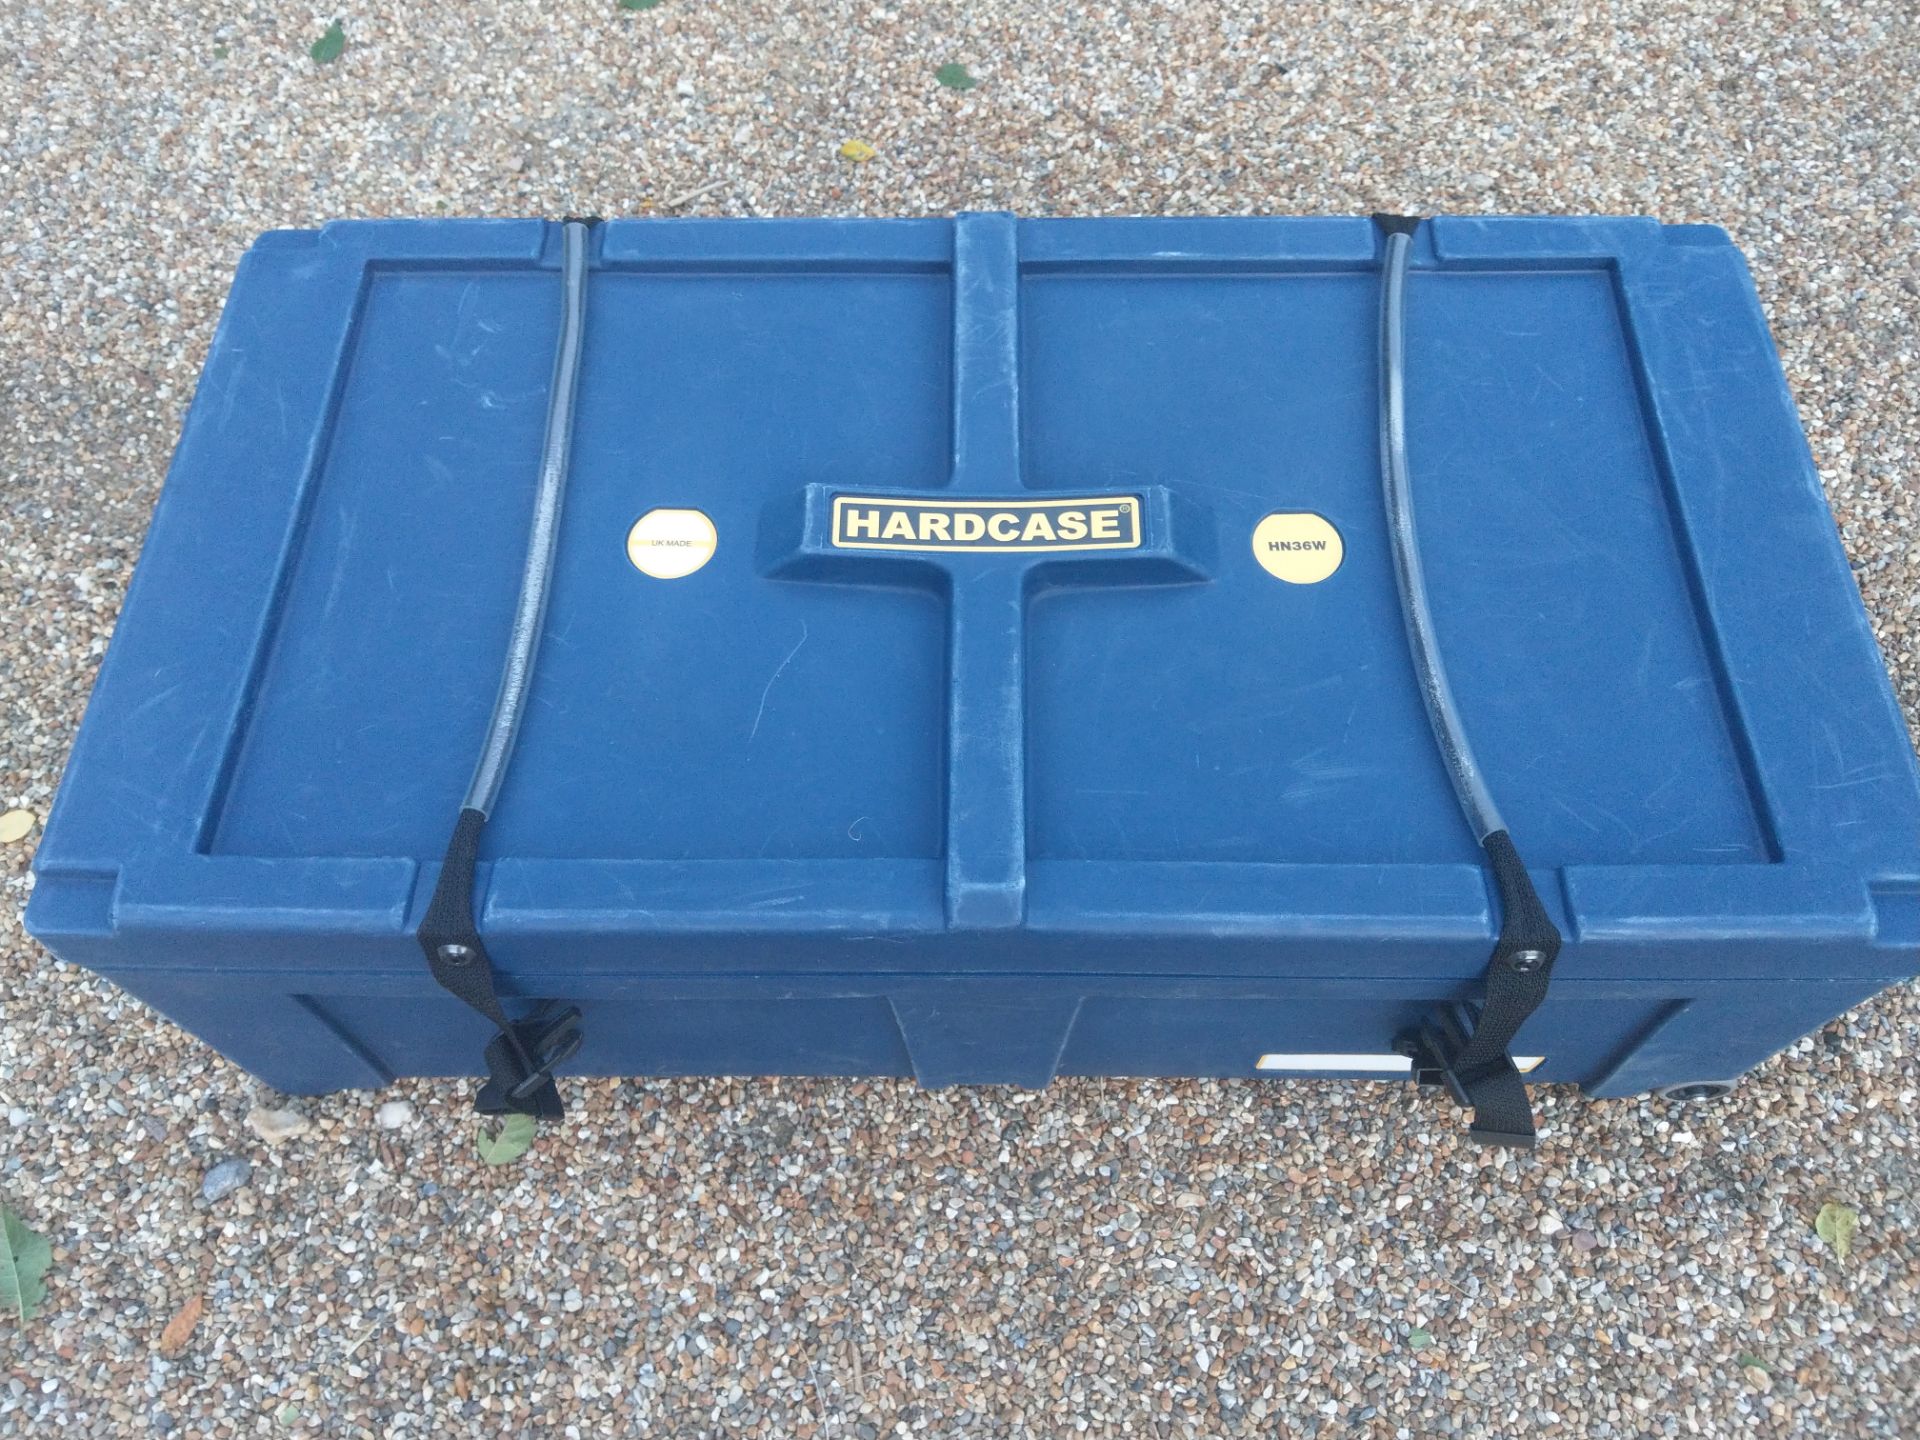 1x Hardcase instrument case HN36W - Image 3 of 3